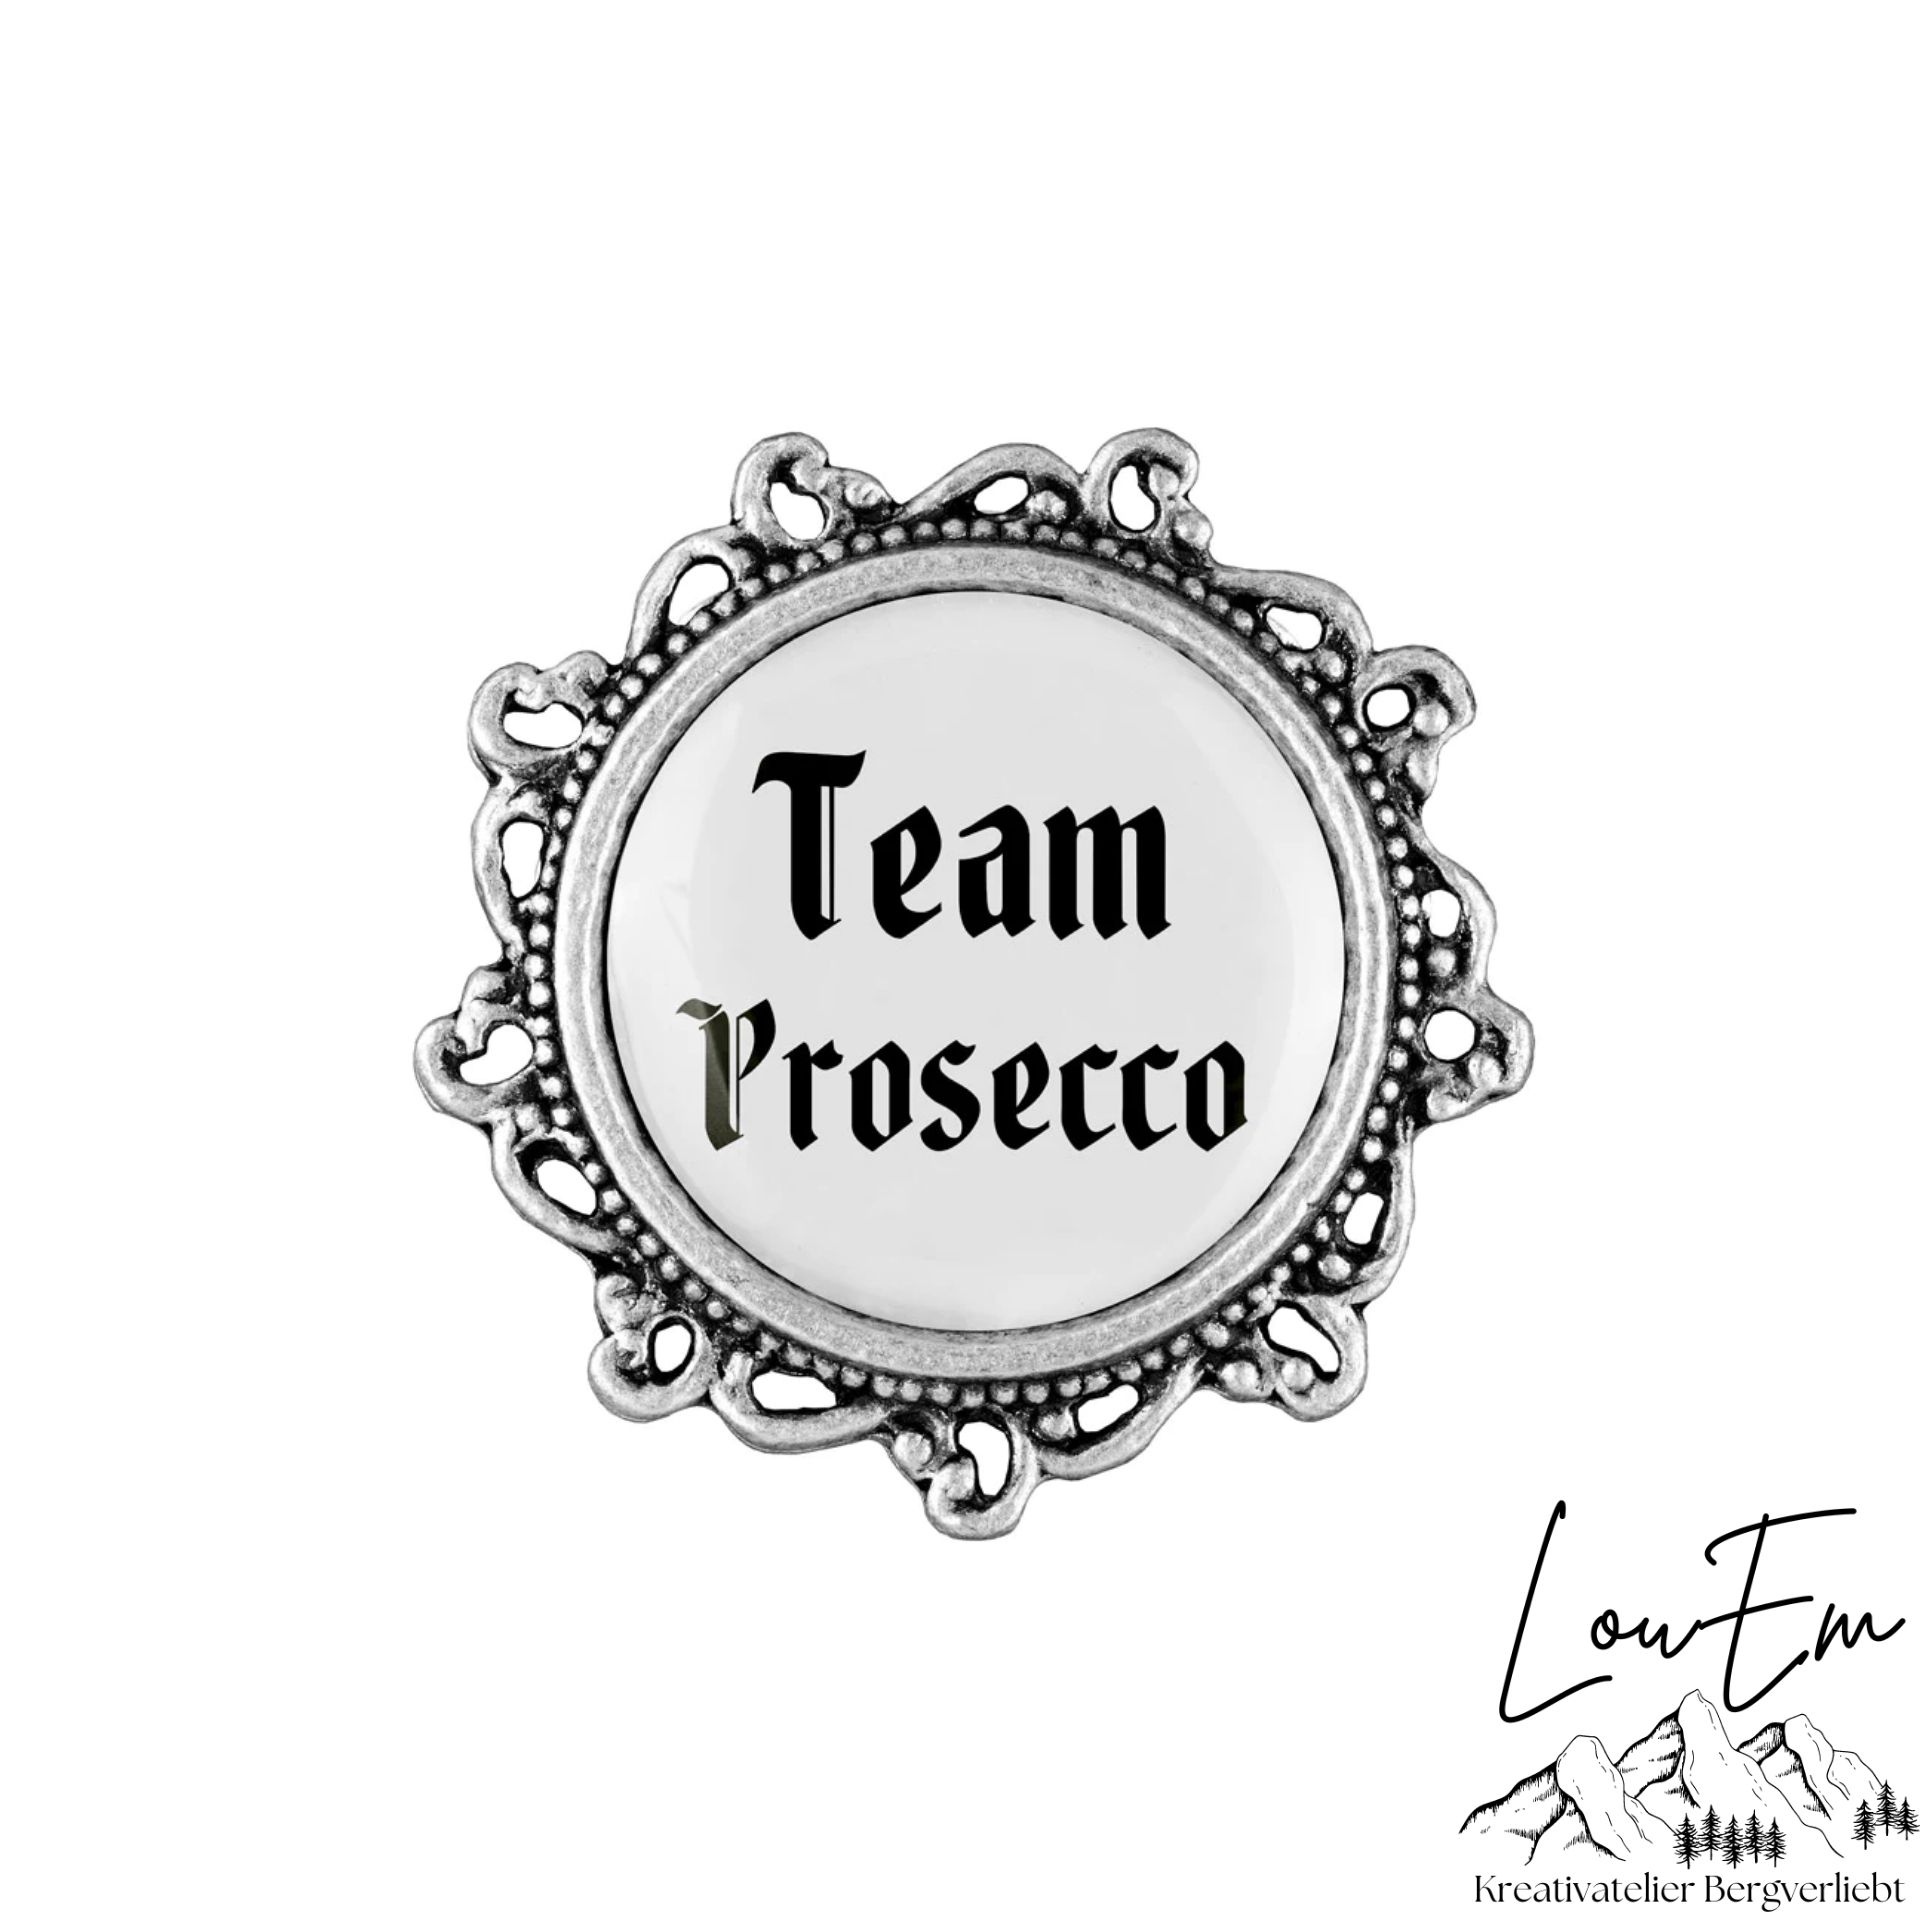 Gaudiknopf Team Prosecco verziert